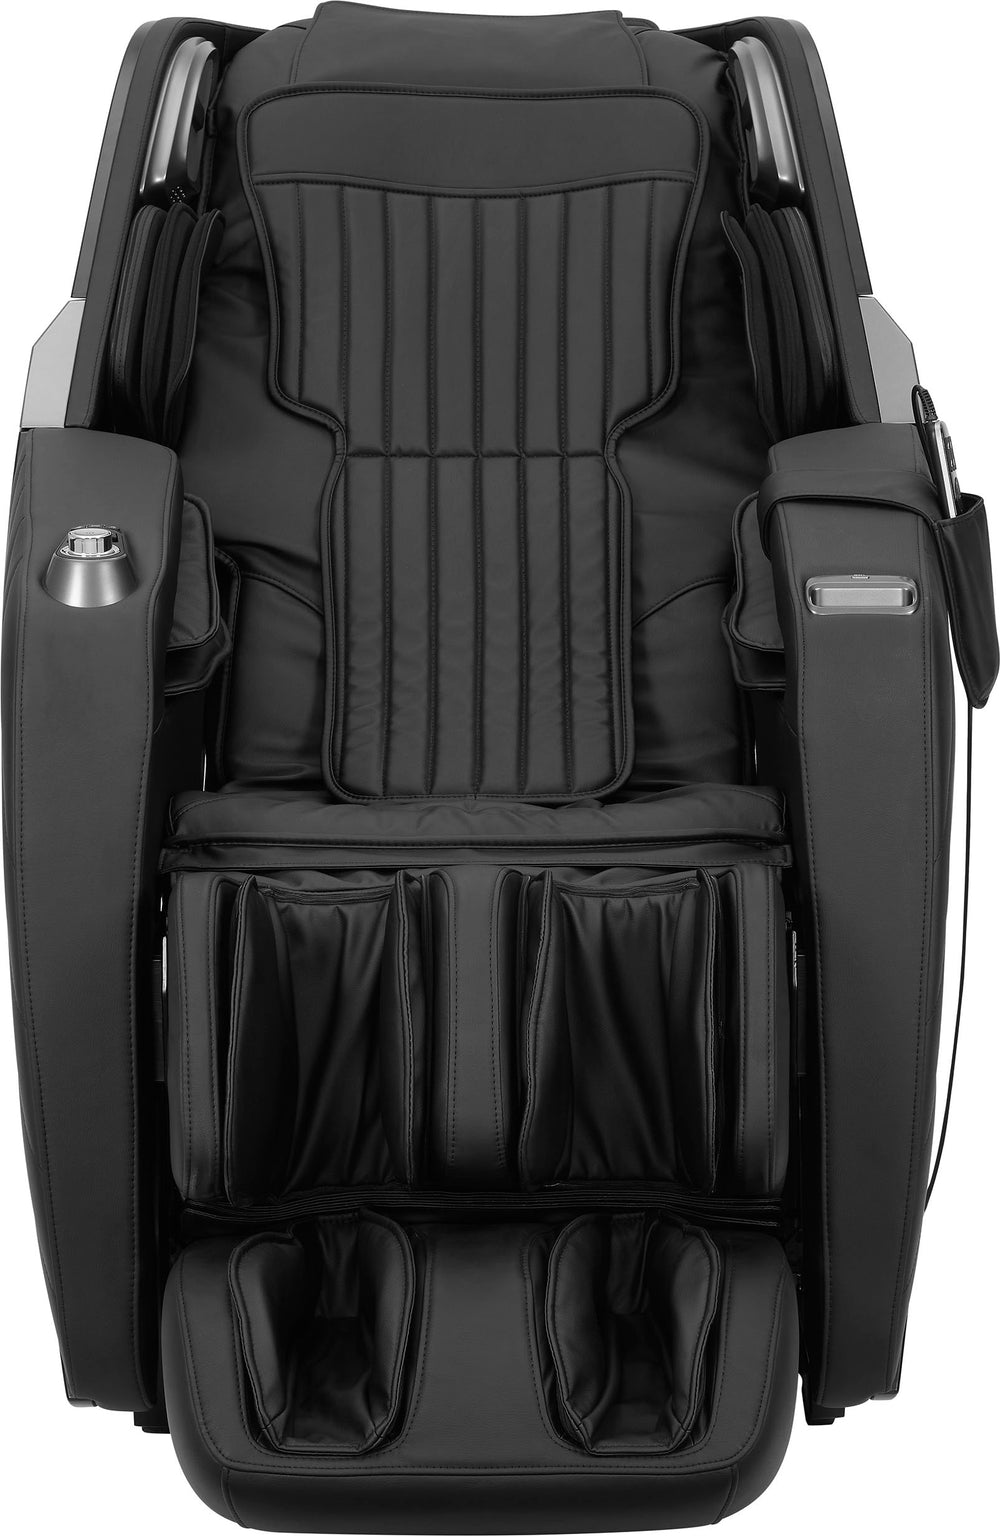 Insignia™ - 3D Zero Gravity Full Body Massage Chair - Black_1